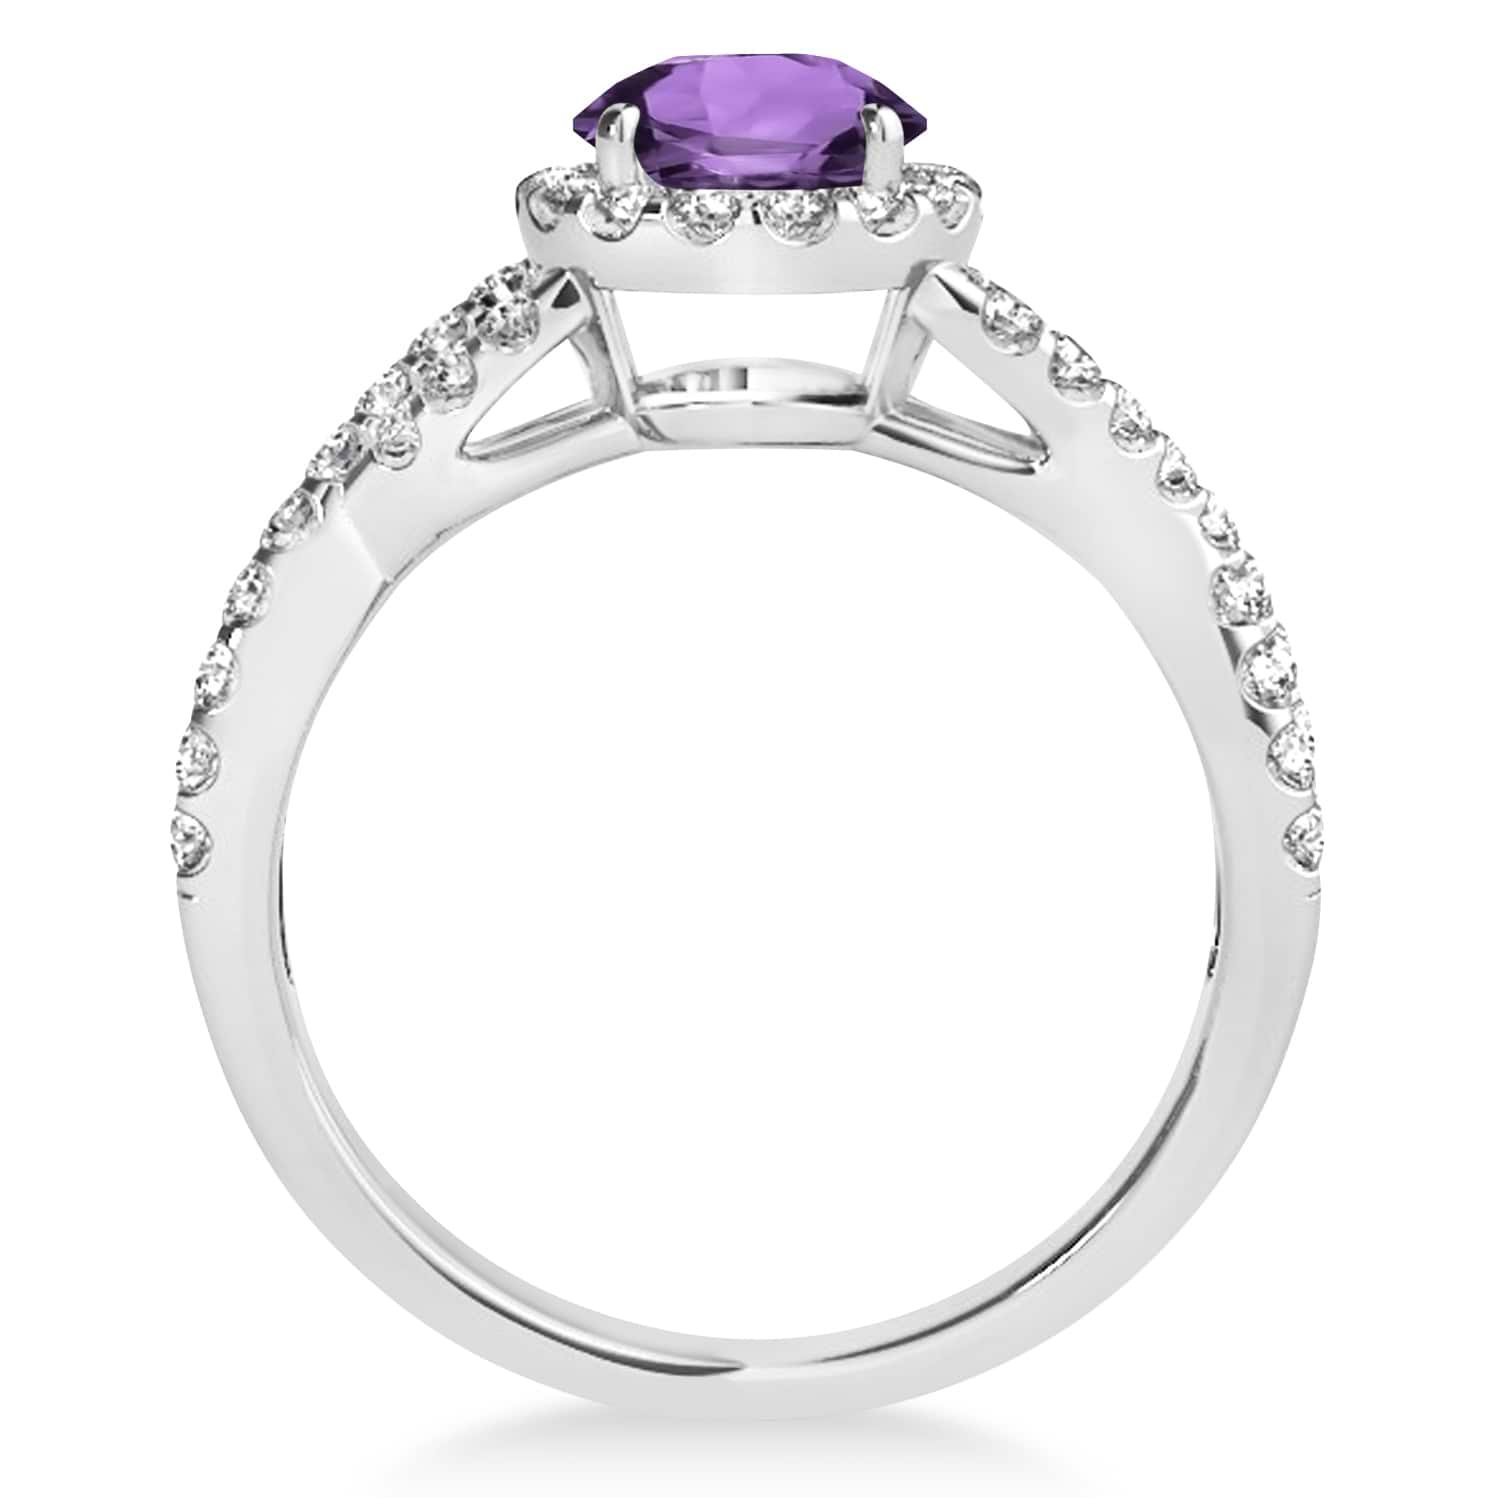 Amethyst & Diamond Twisted Engagement Ring Palladium 1.20ct